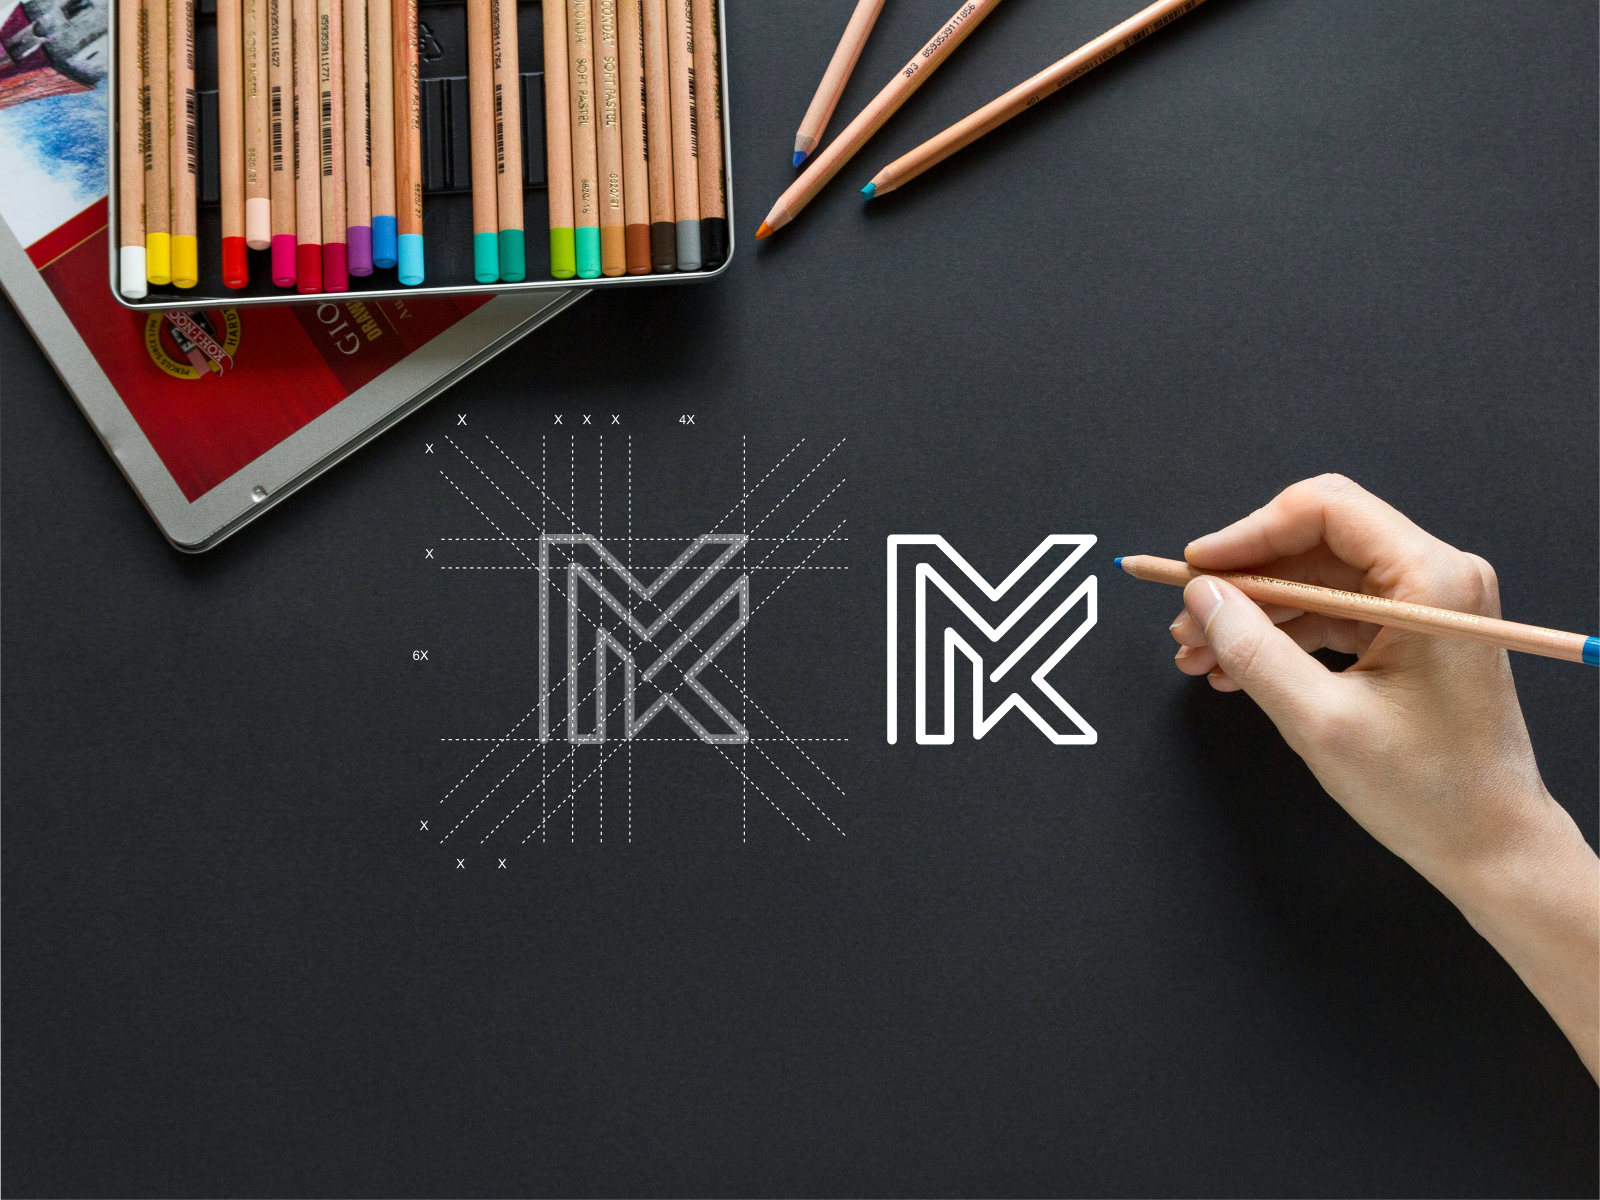 m&k designs